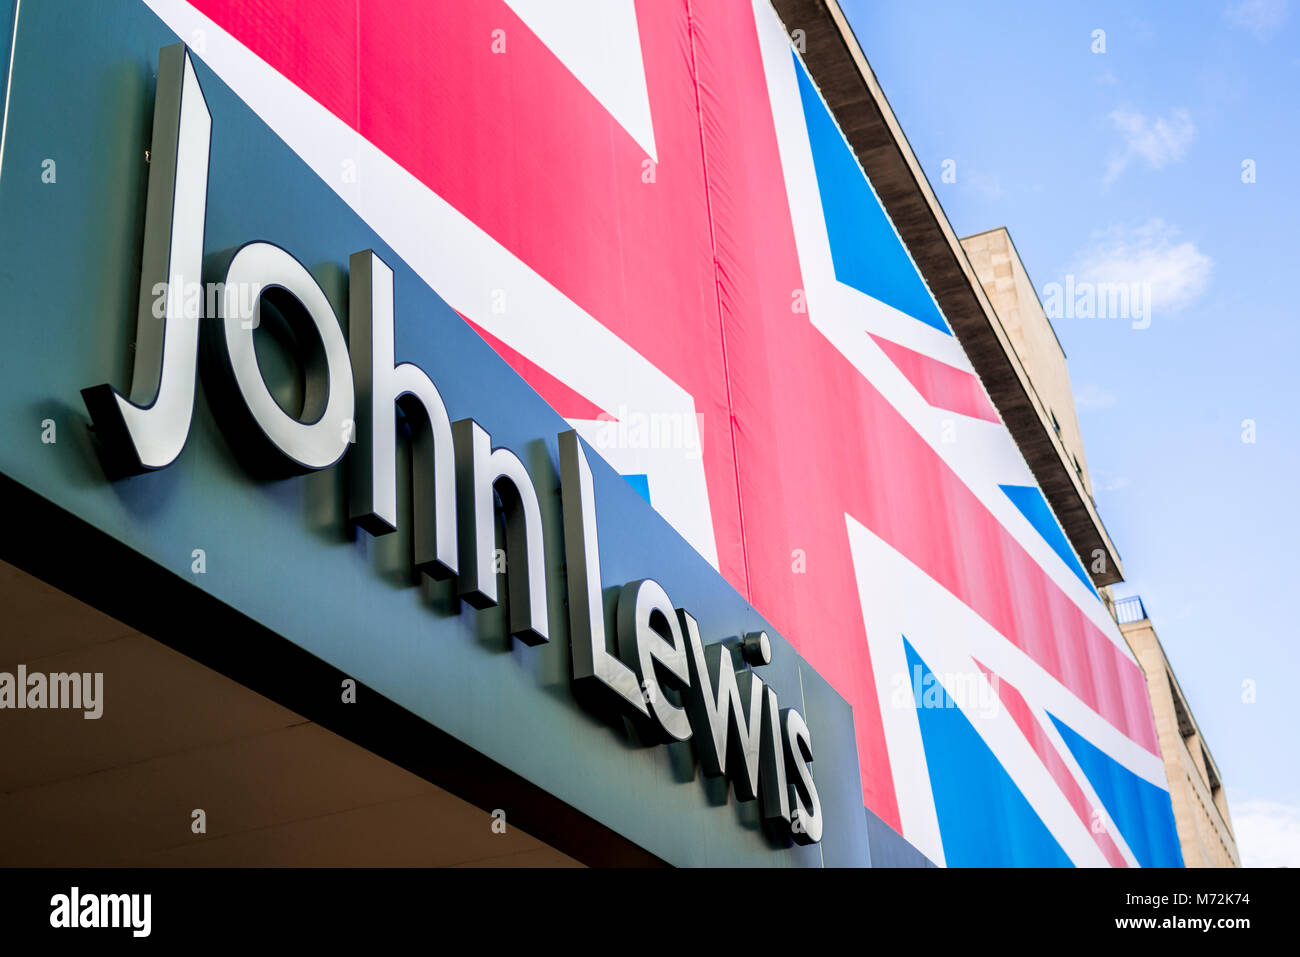 John Lewis department store with Union Jack flag Stock Photo